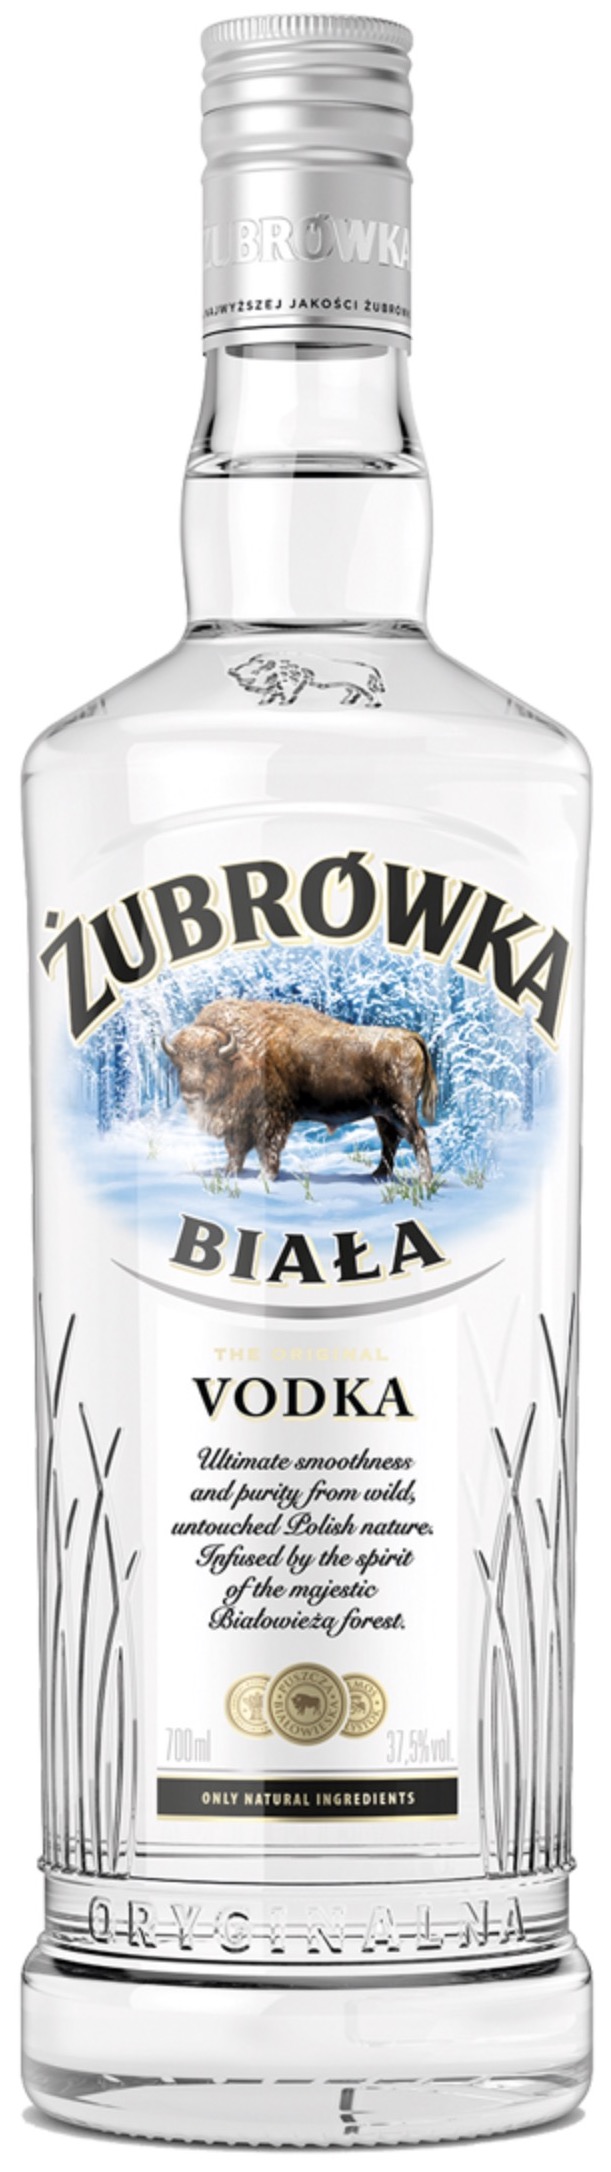 Zubrowka Biala Vodka 37,5% vol. 0,7L